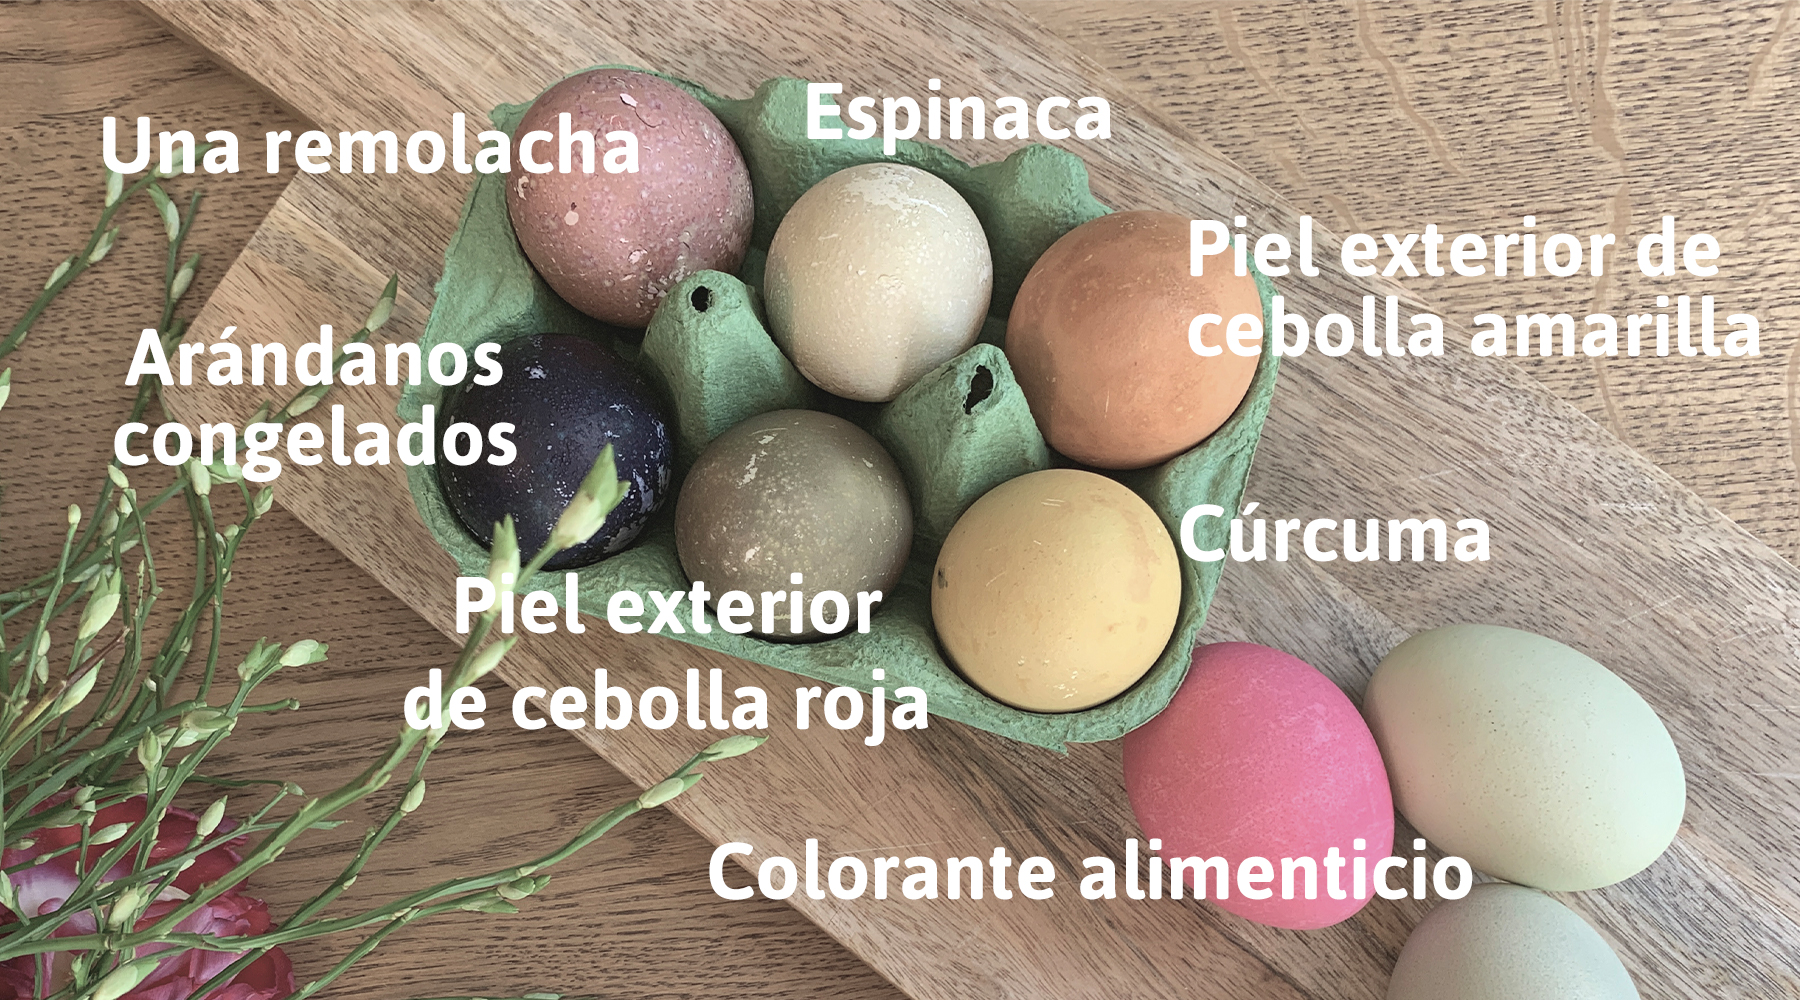 Para colorear huevos de forma natural